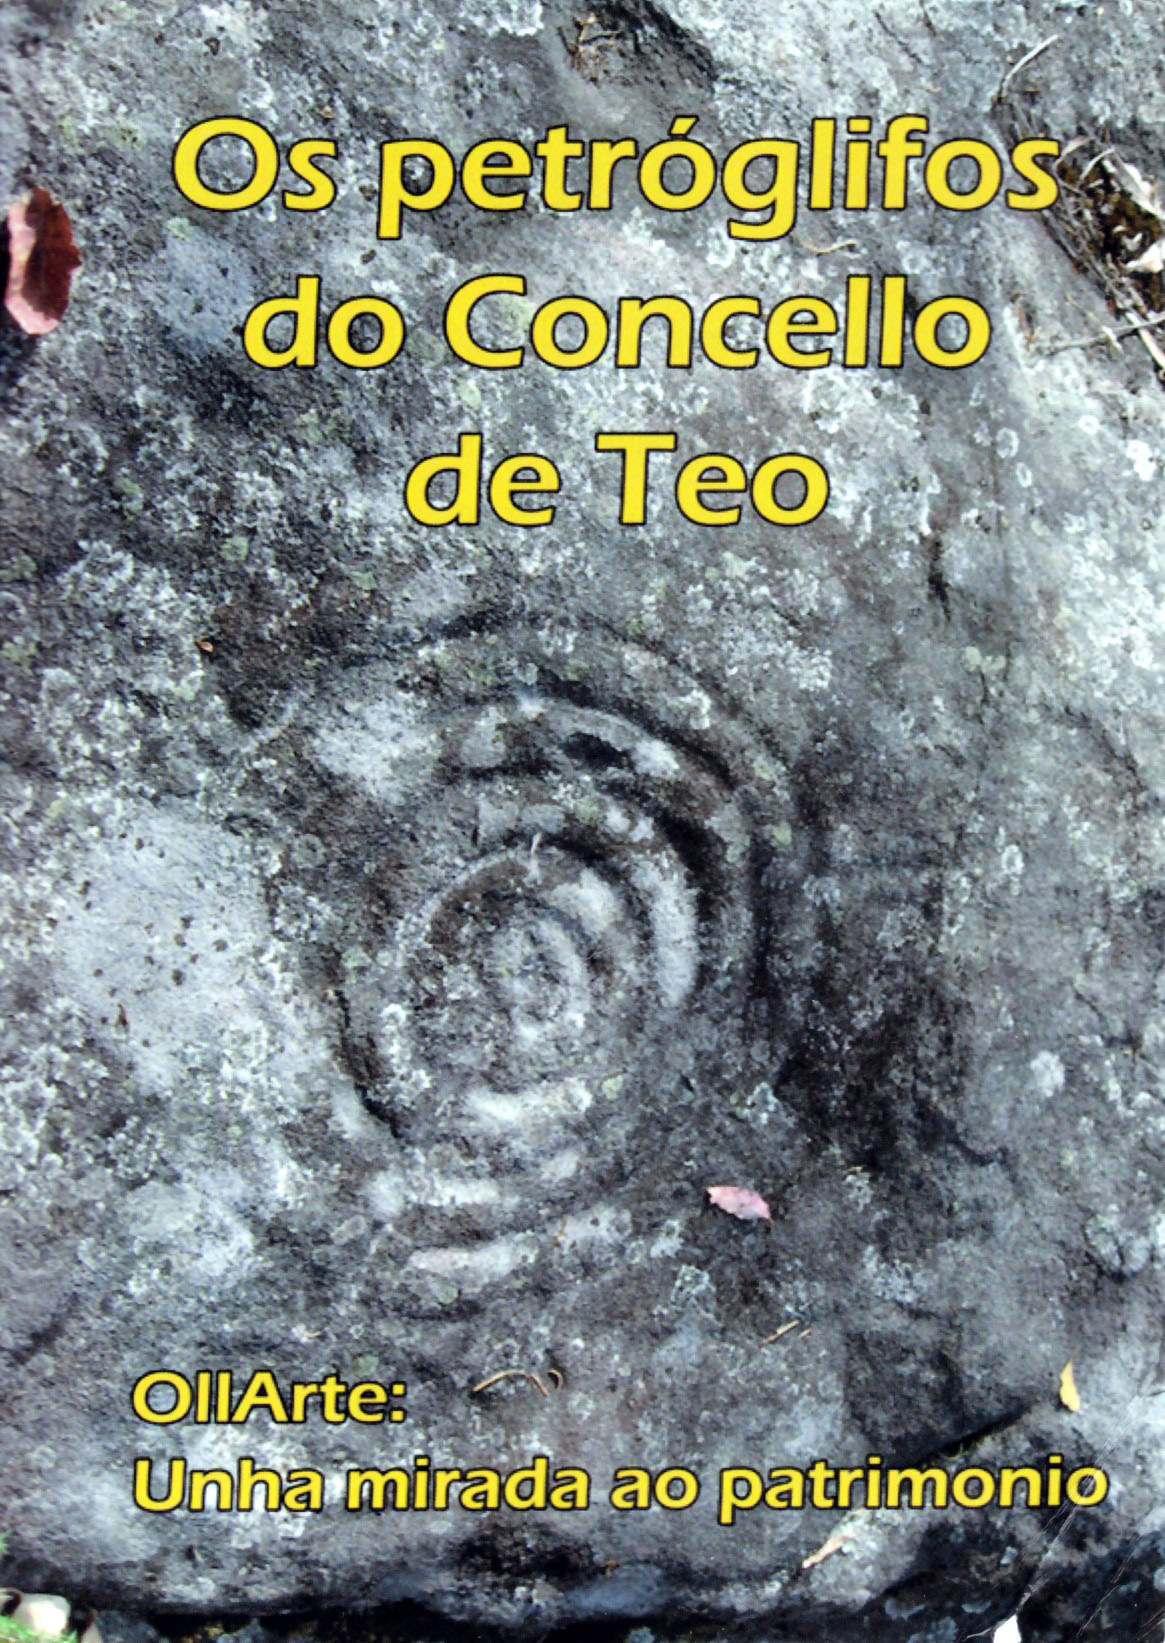 Guía «Os Petróglifos de Teo» 2008.